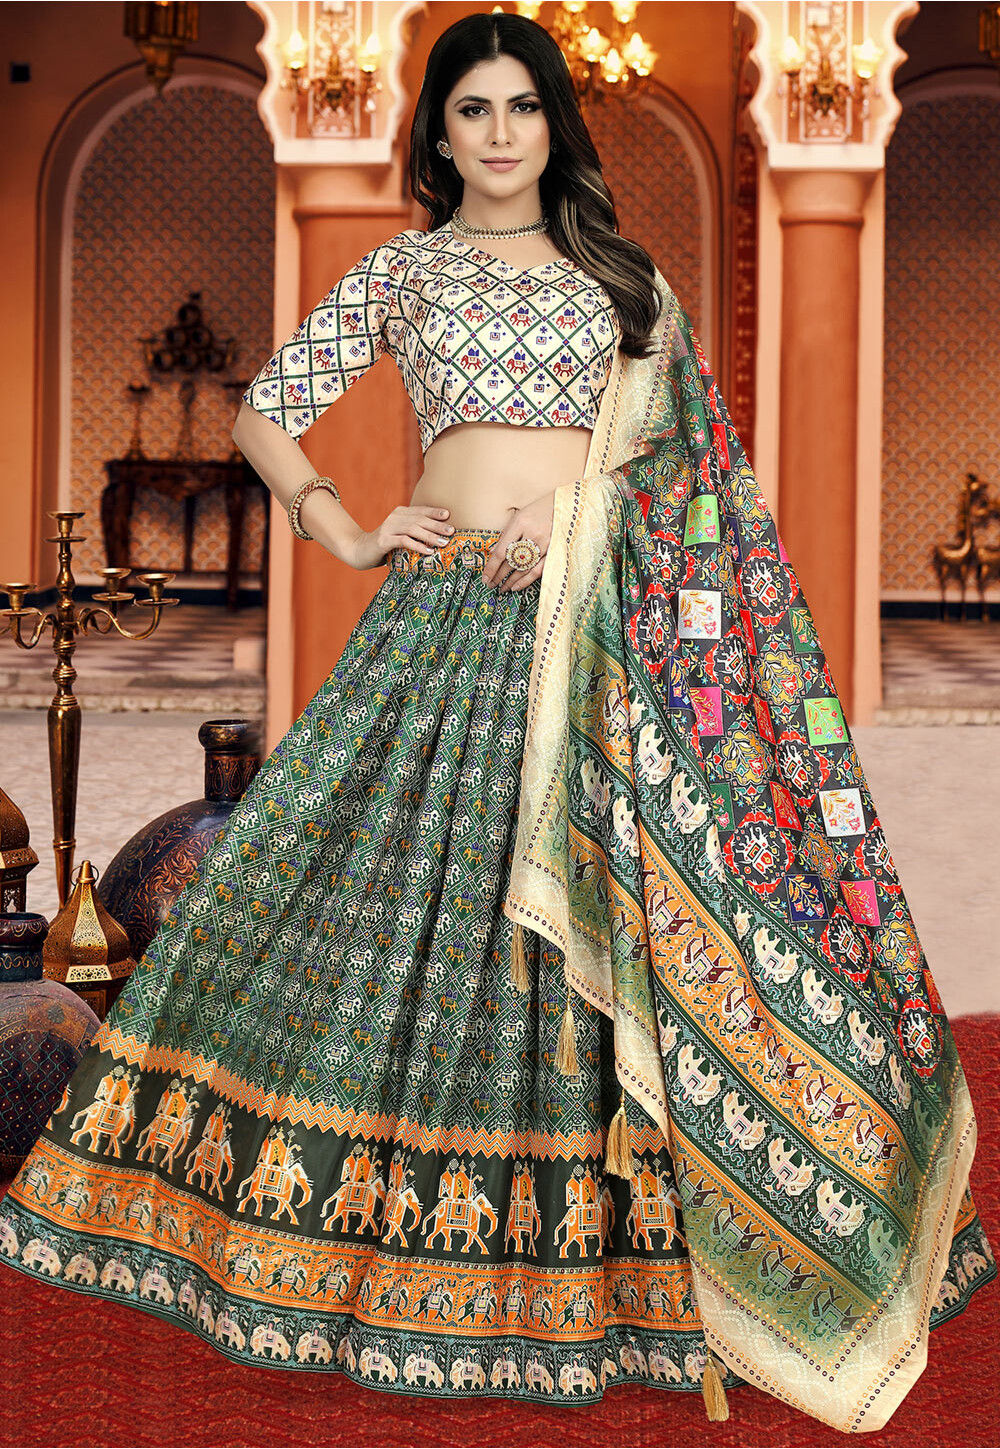 Buy Bright Pink and Orange Banglori Silk Lehenga Choli Design Online -  LLCV01245 | Andaaz Fashion